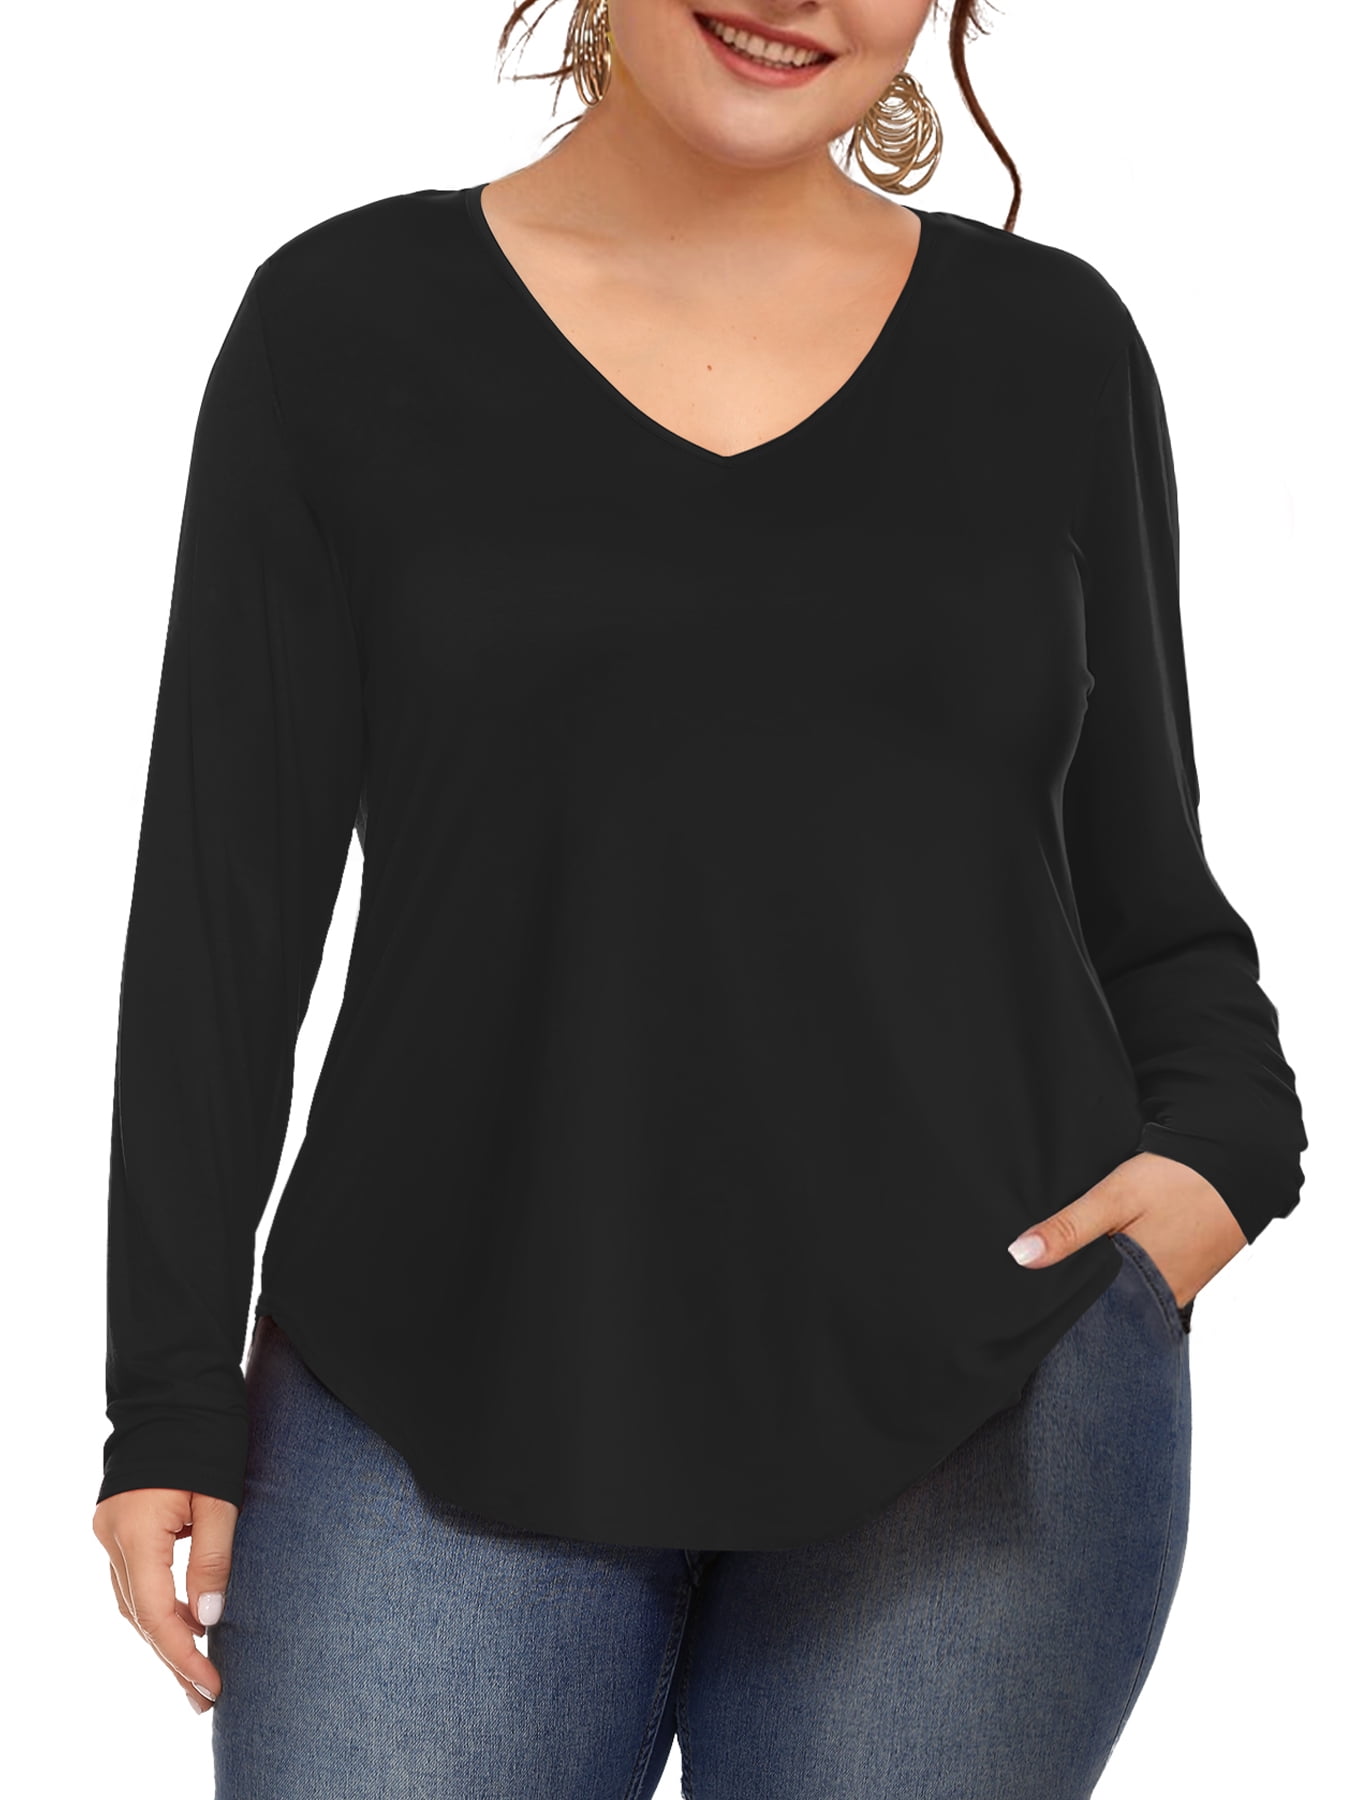 Amoretu Womens T Shirts Long Sleeve V Neck Plus Size Tops Blouses ...